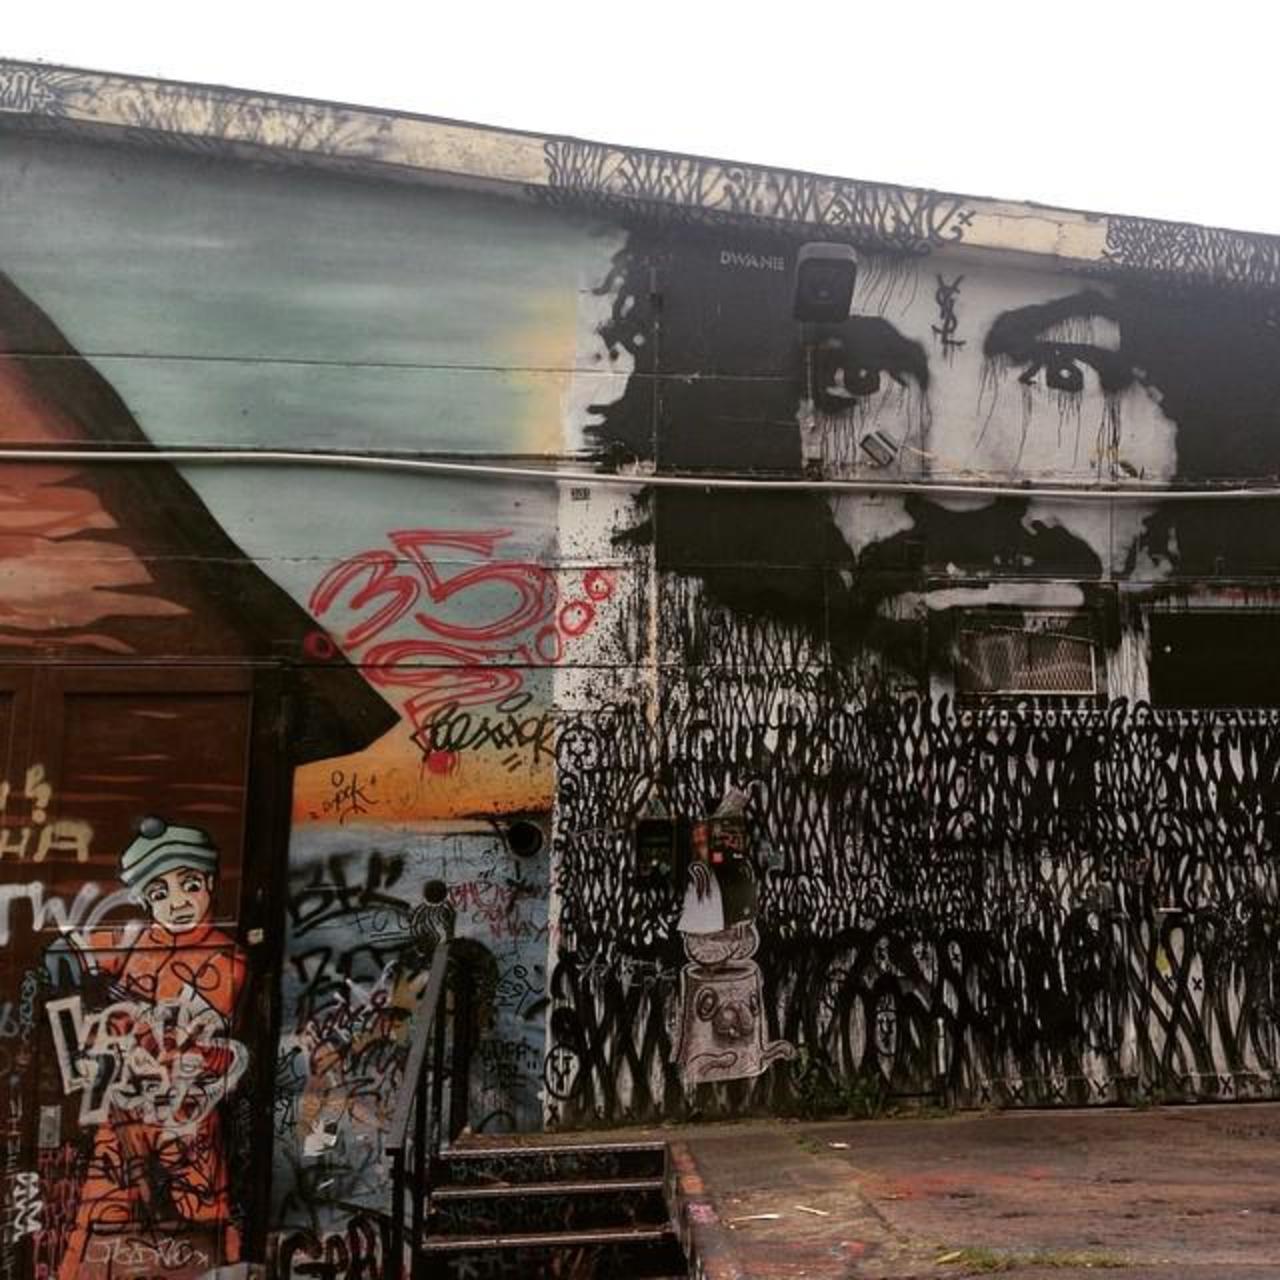 #rawgelände #raw #rawtemple #rawtempel #wall #mural #dwane #instagraffiti #graffiti #graffitiart #graffitigram #str… http://t.co/nEsIyePxJC